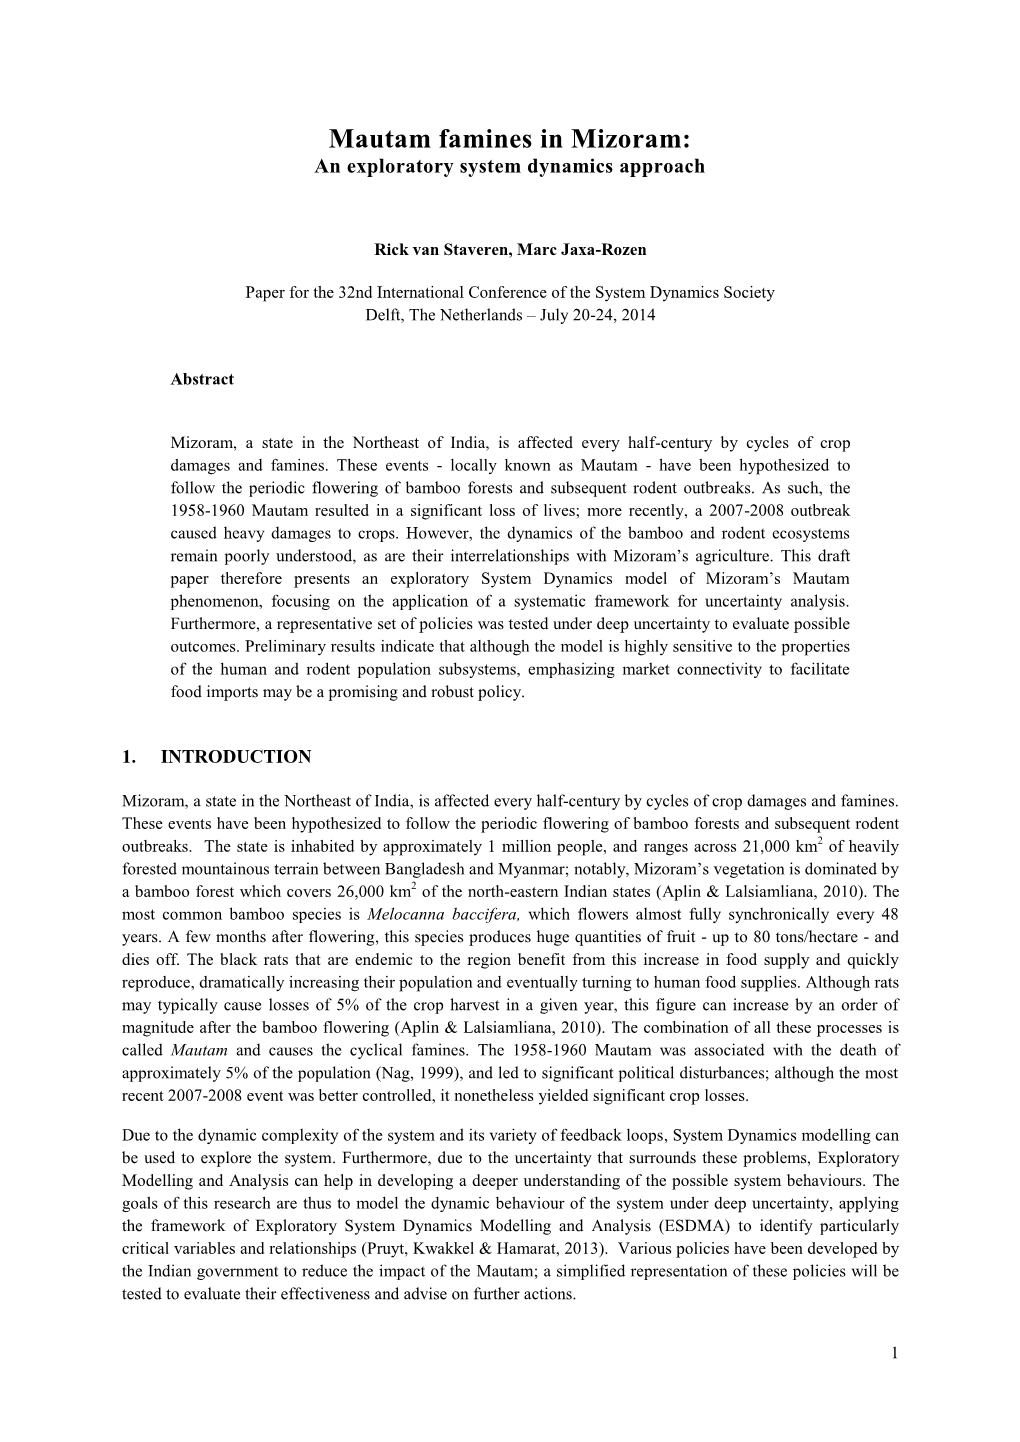 Mautam Famines in Mizoram: an Exploratory System Dynamics Approach